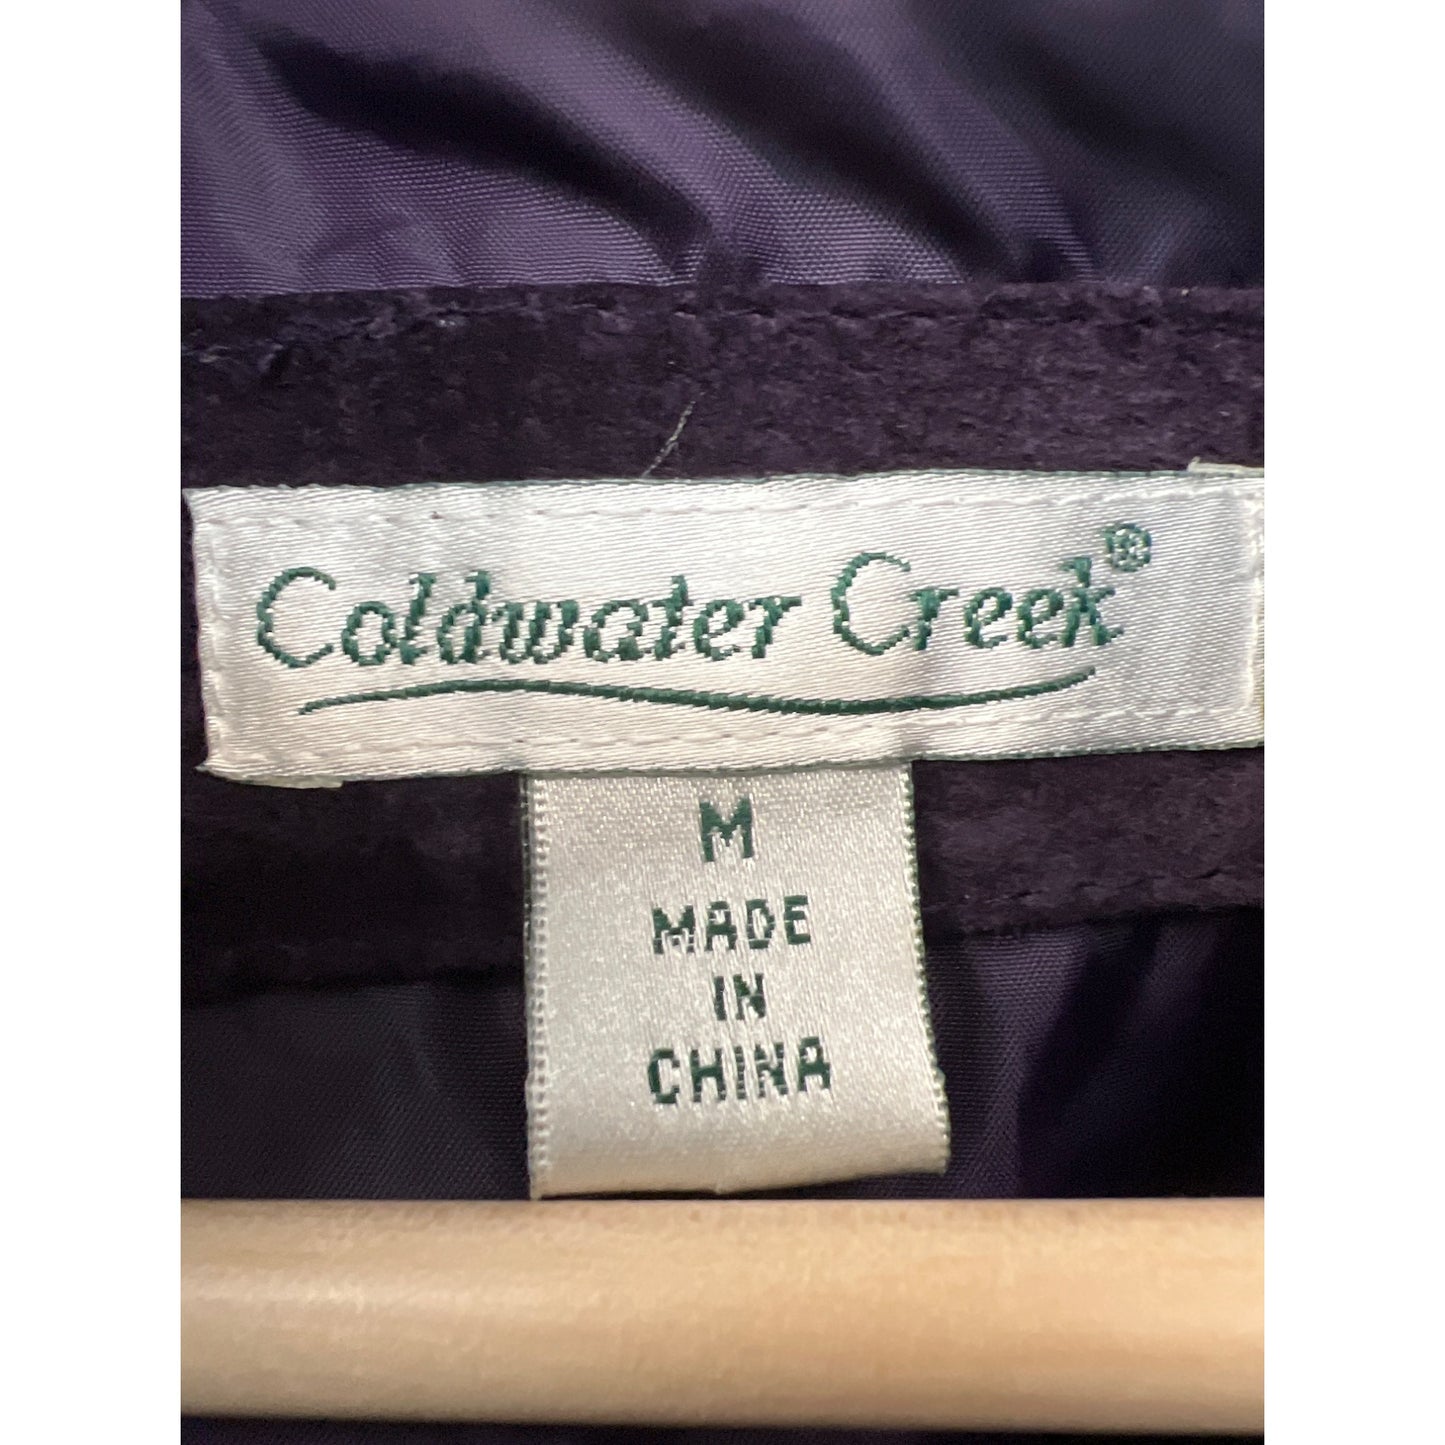 Coldwater Creek Purple Suede & Knit Cardigan Jacket